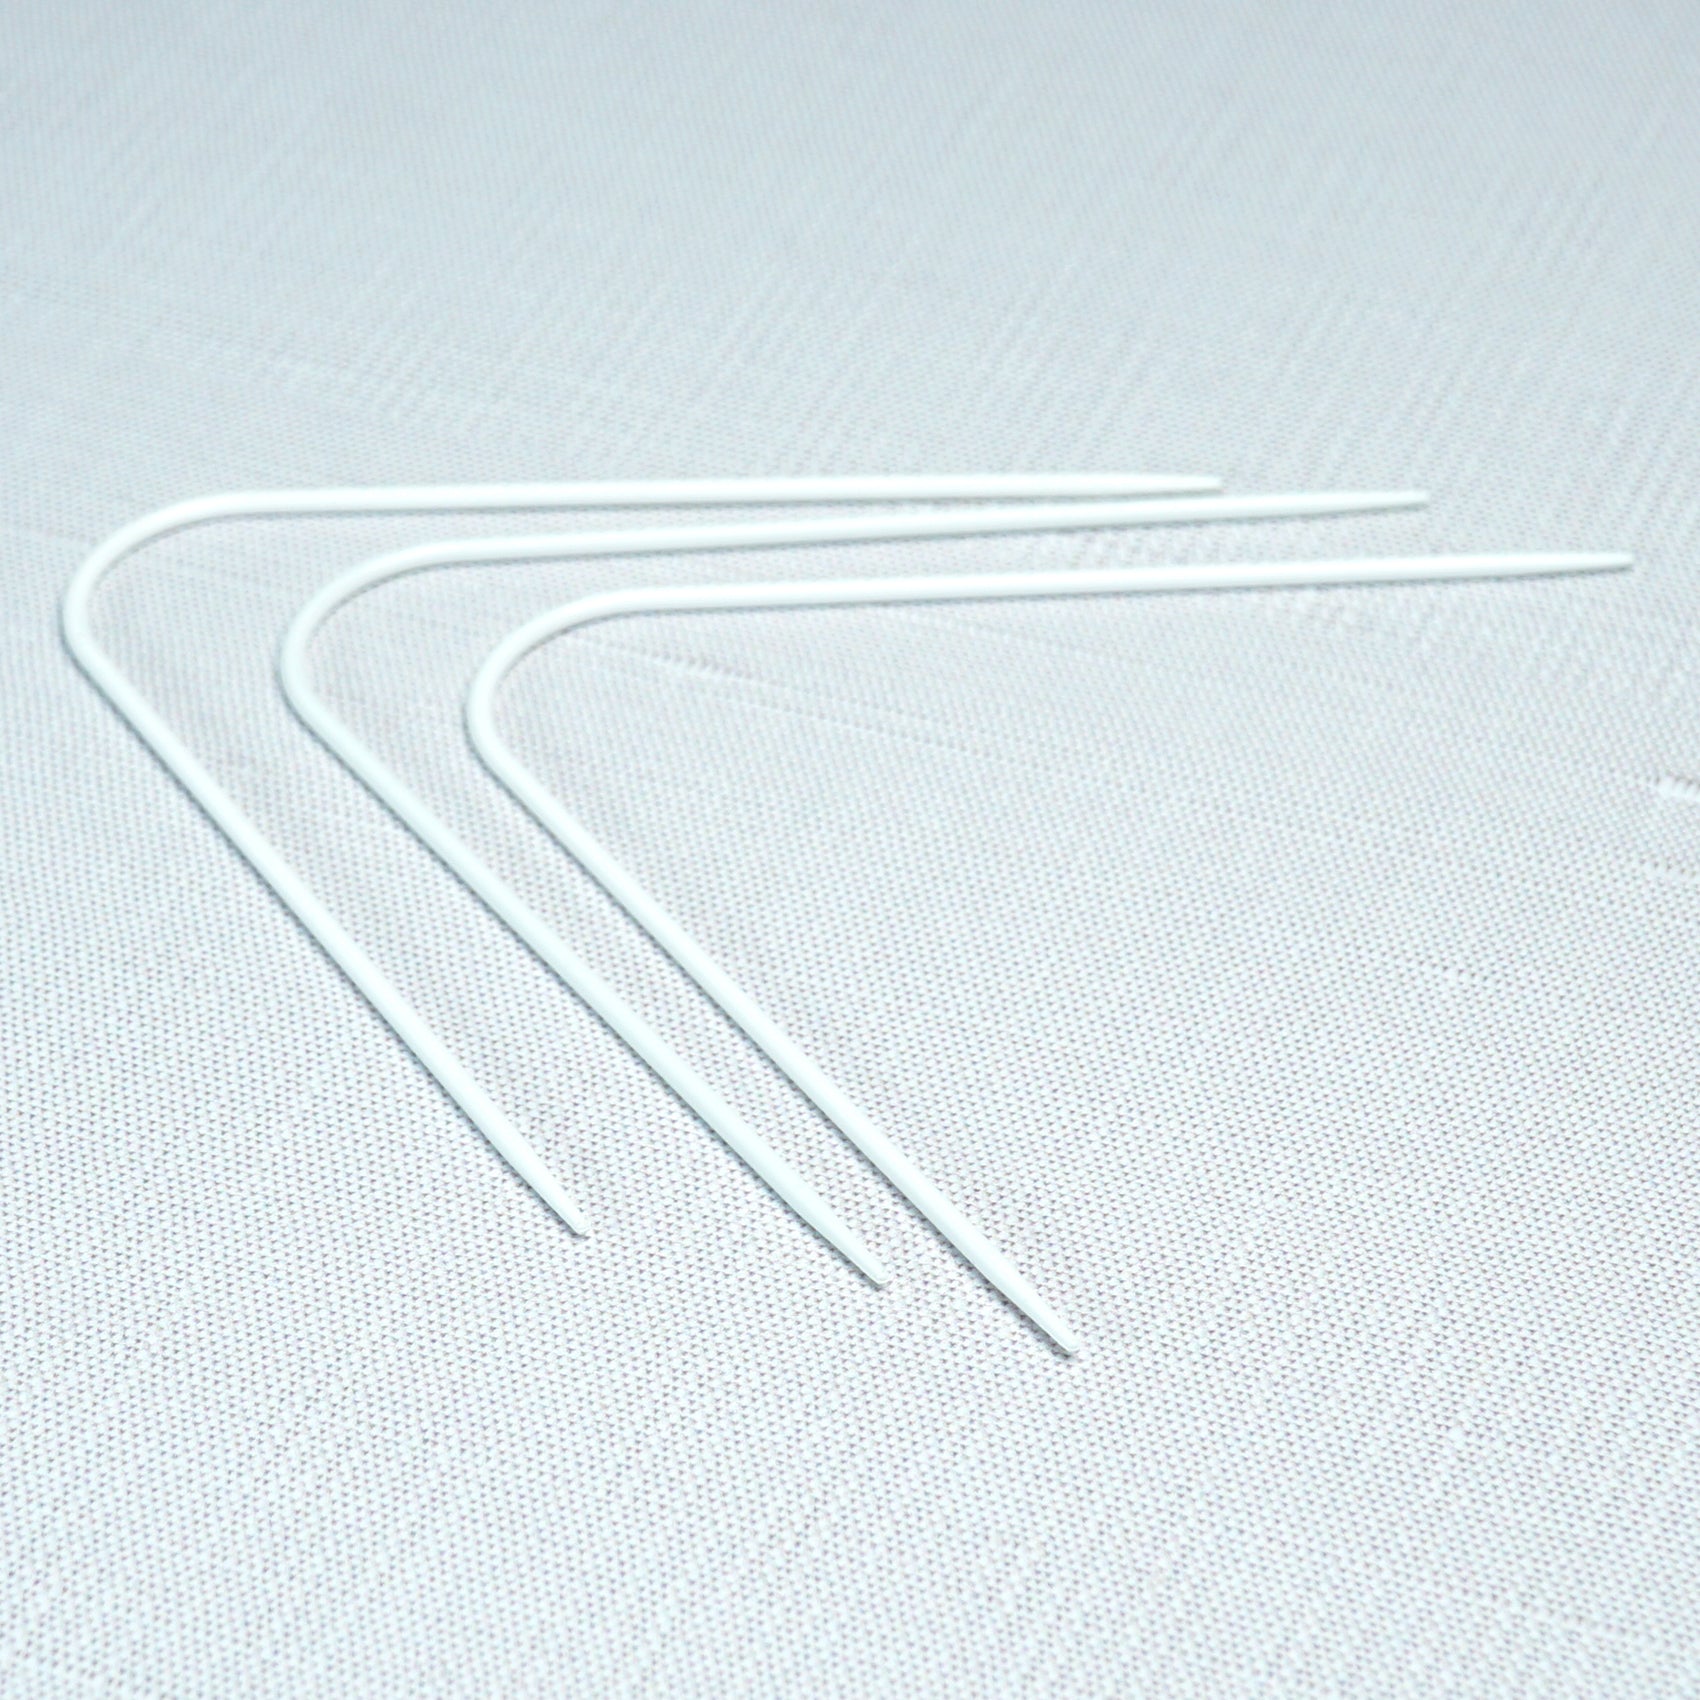 Neko Curved Double Point Needles